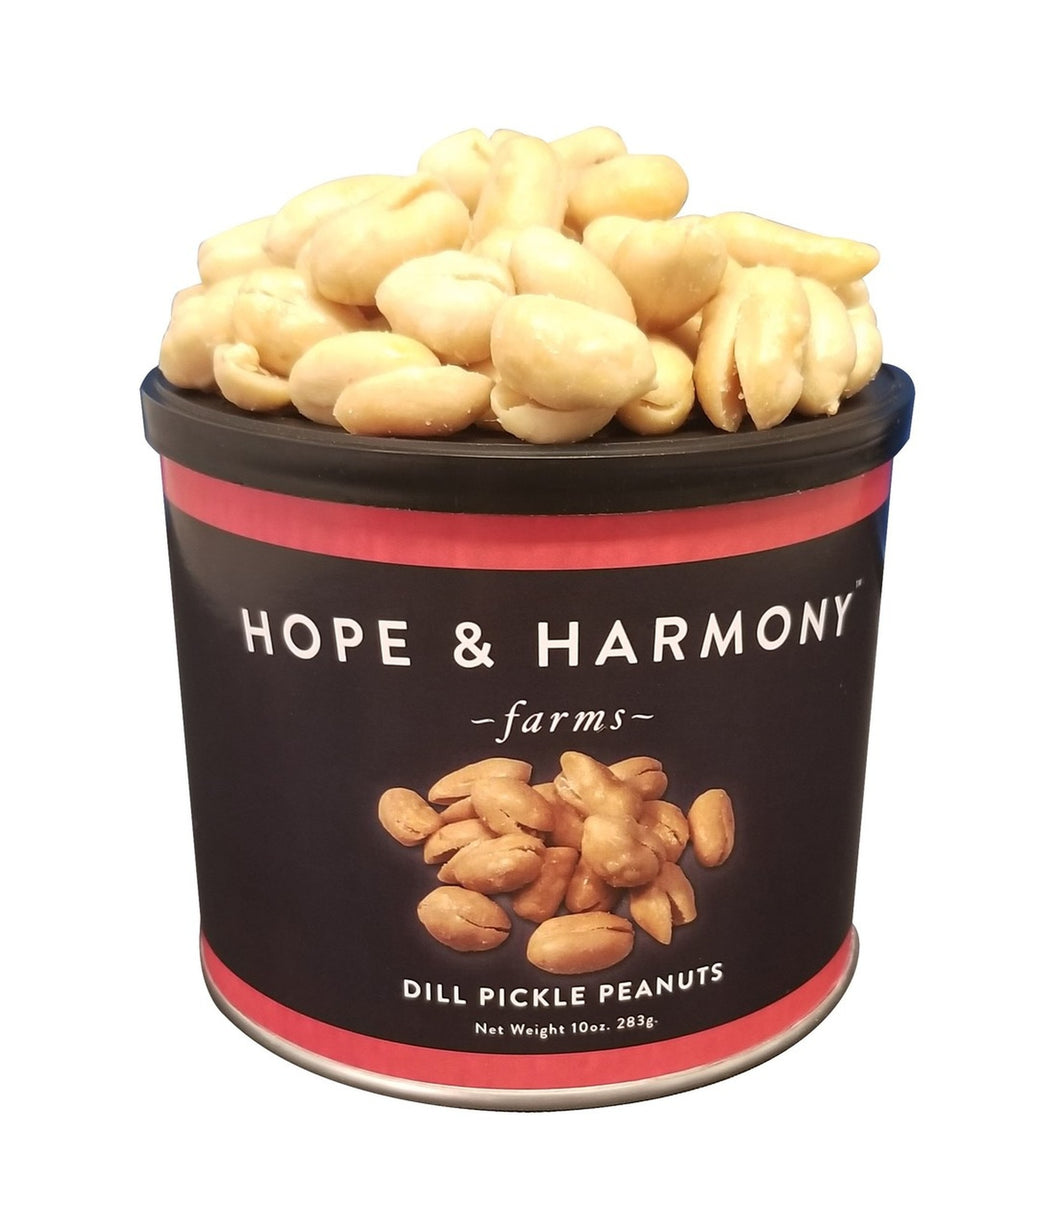 Hope & Harmony Farms Dill Pickle Peanuts